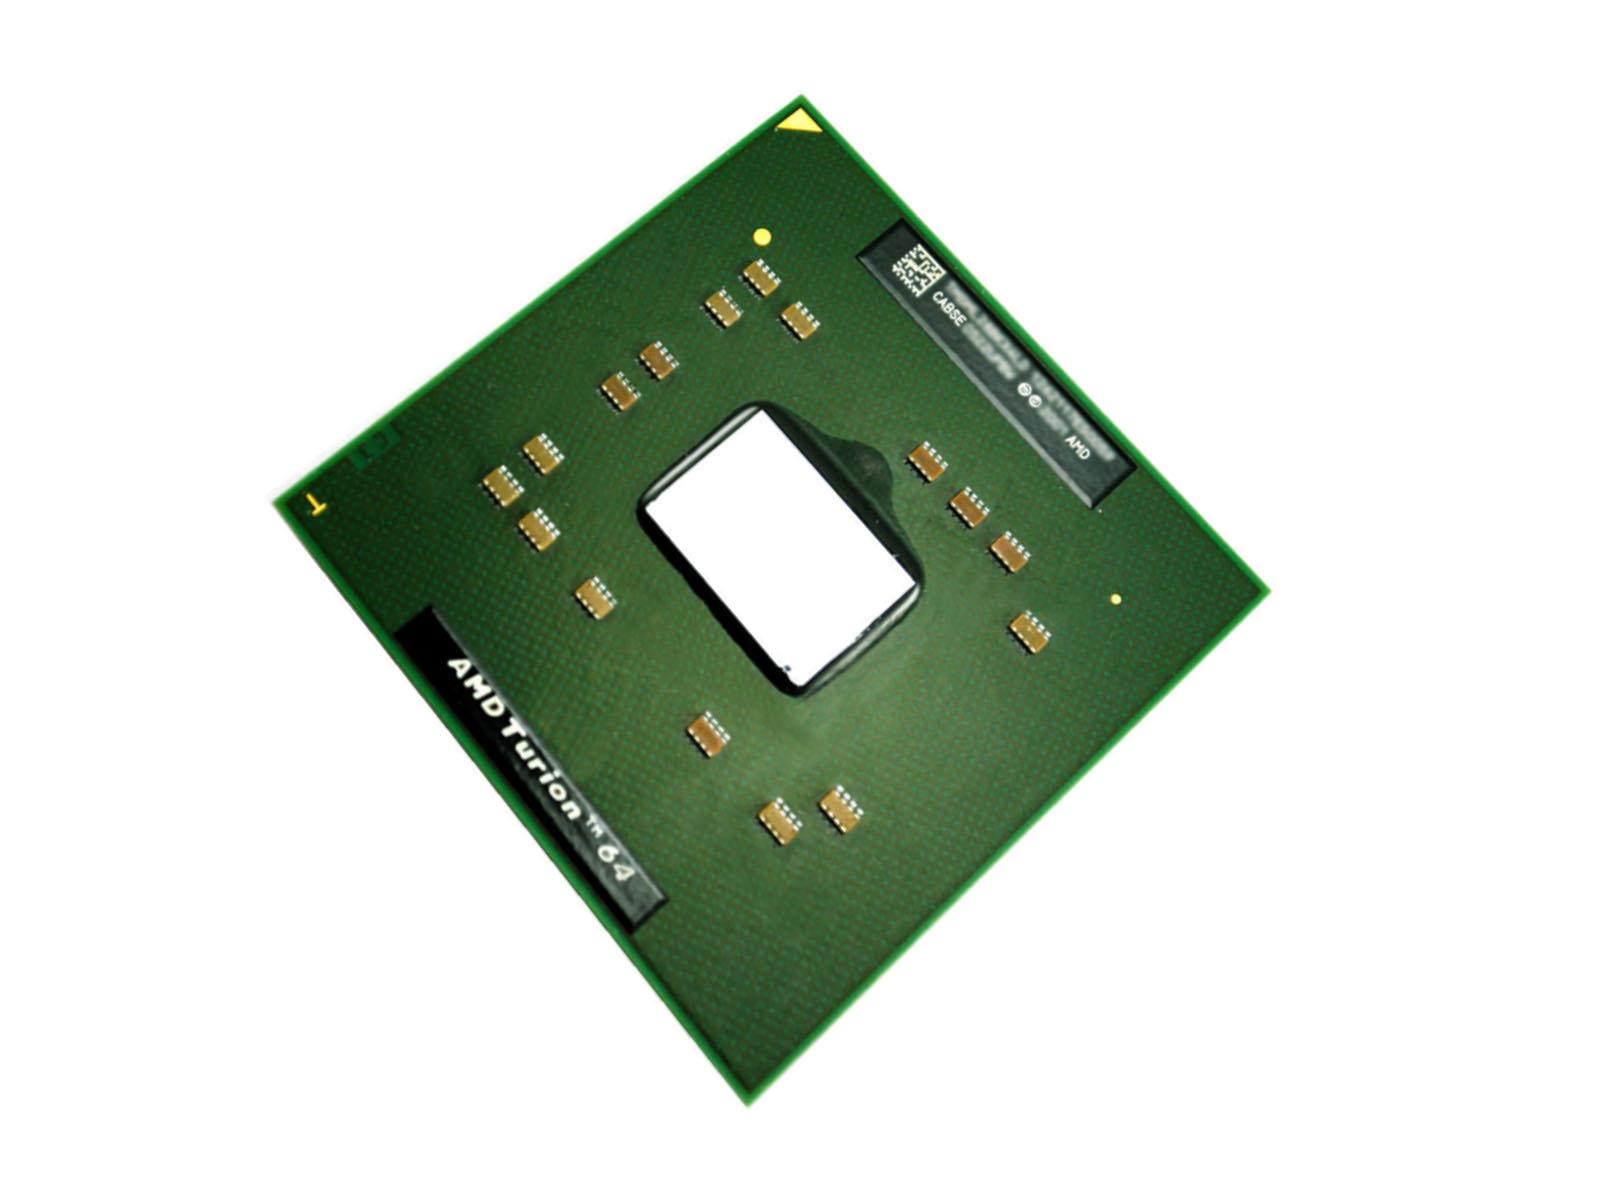 AMD Turion 64 cpu